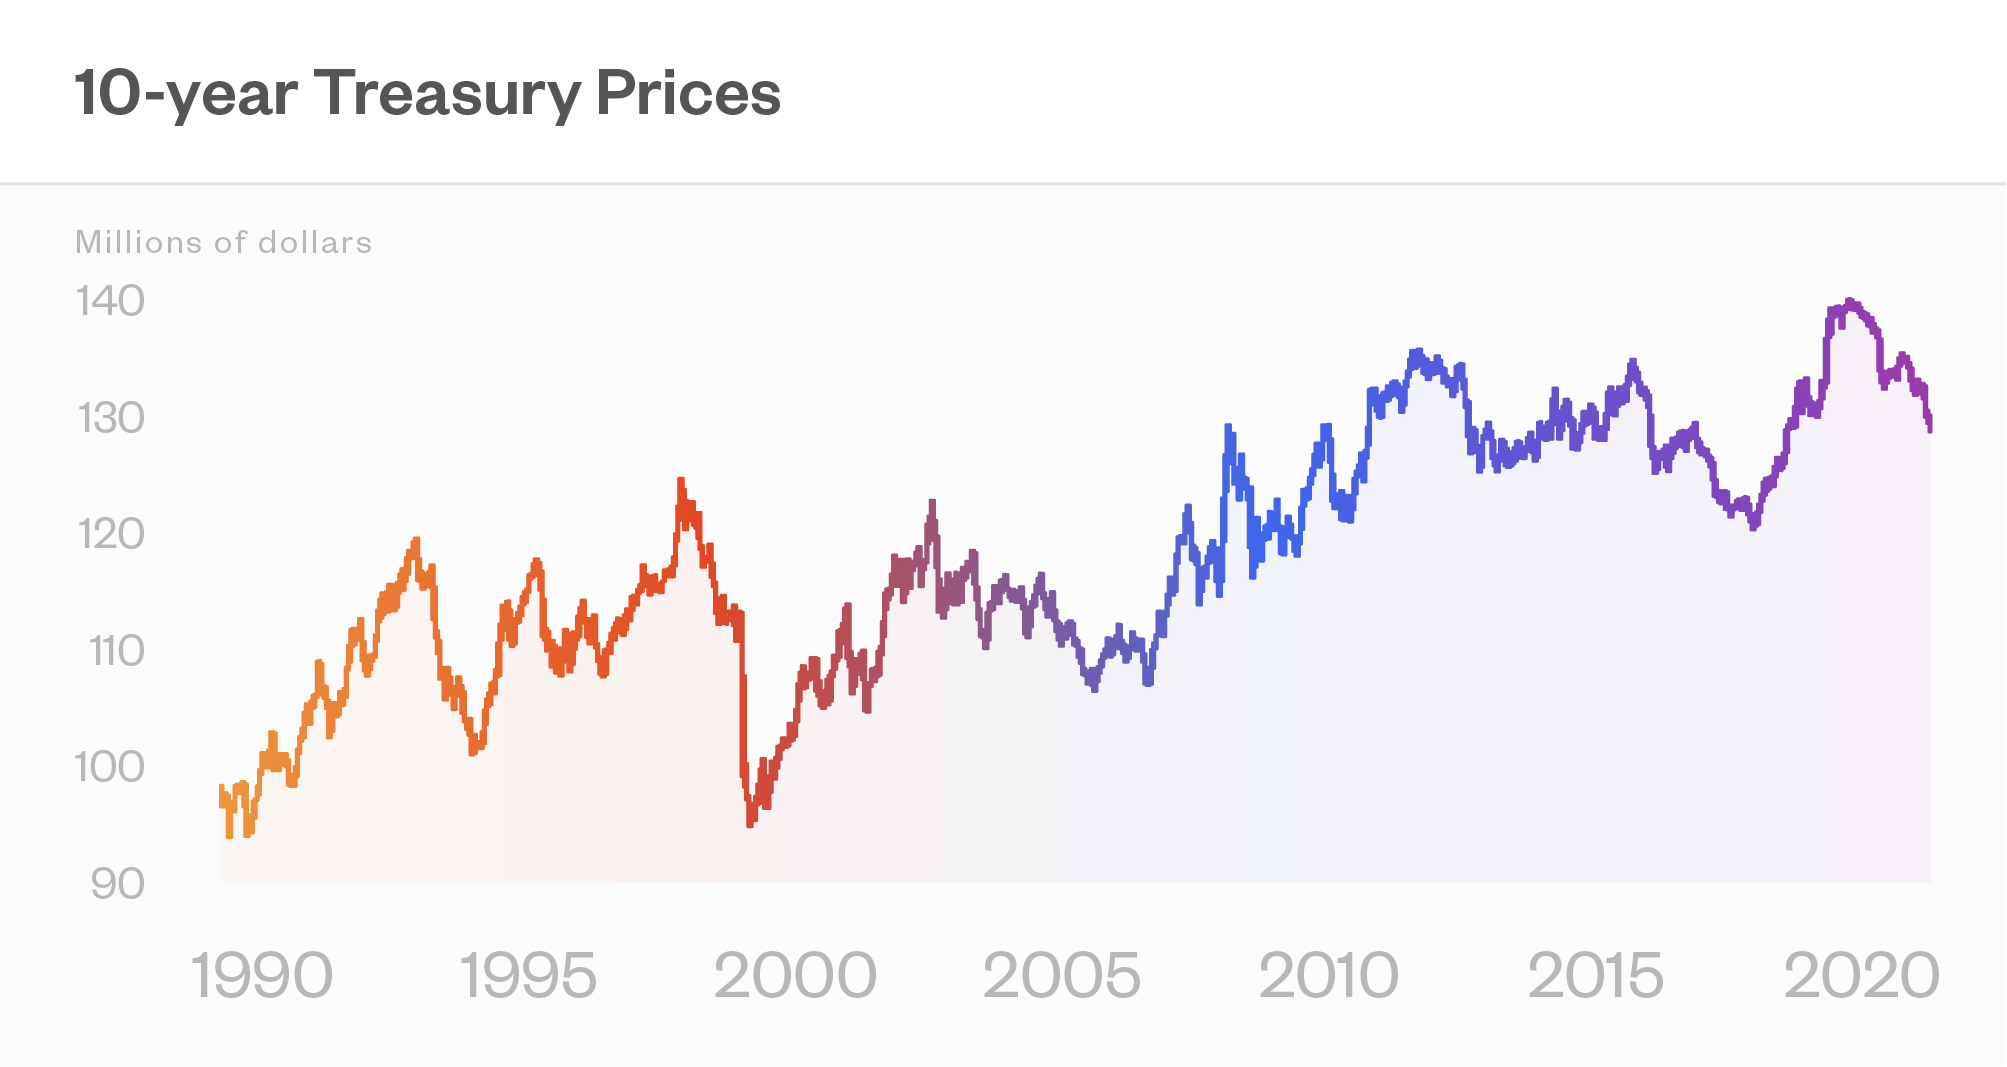 10-year Treasury prices